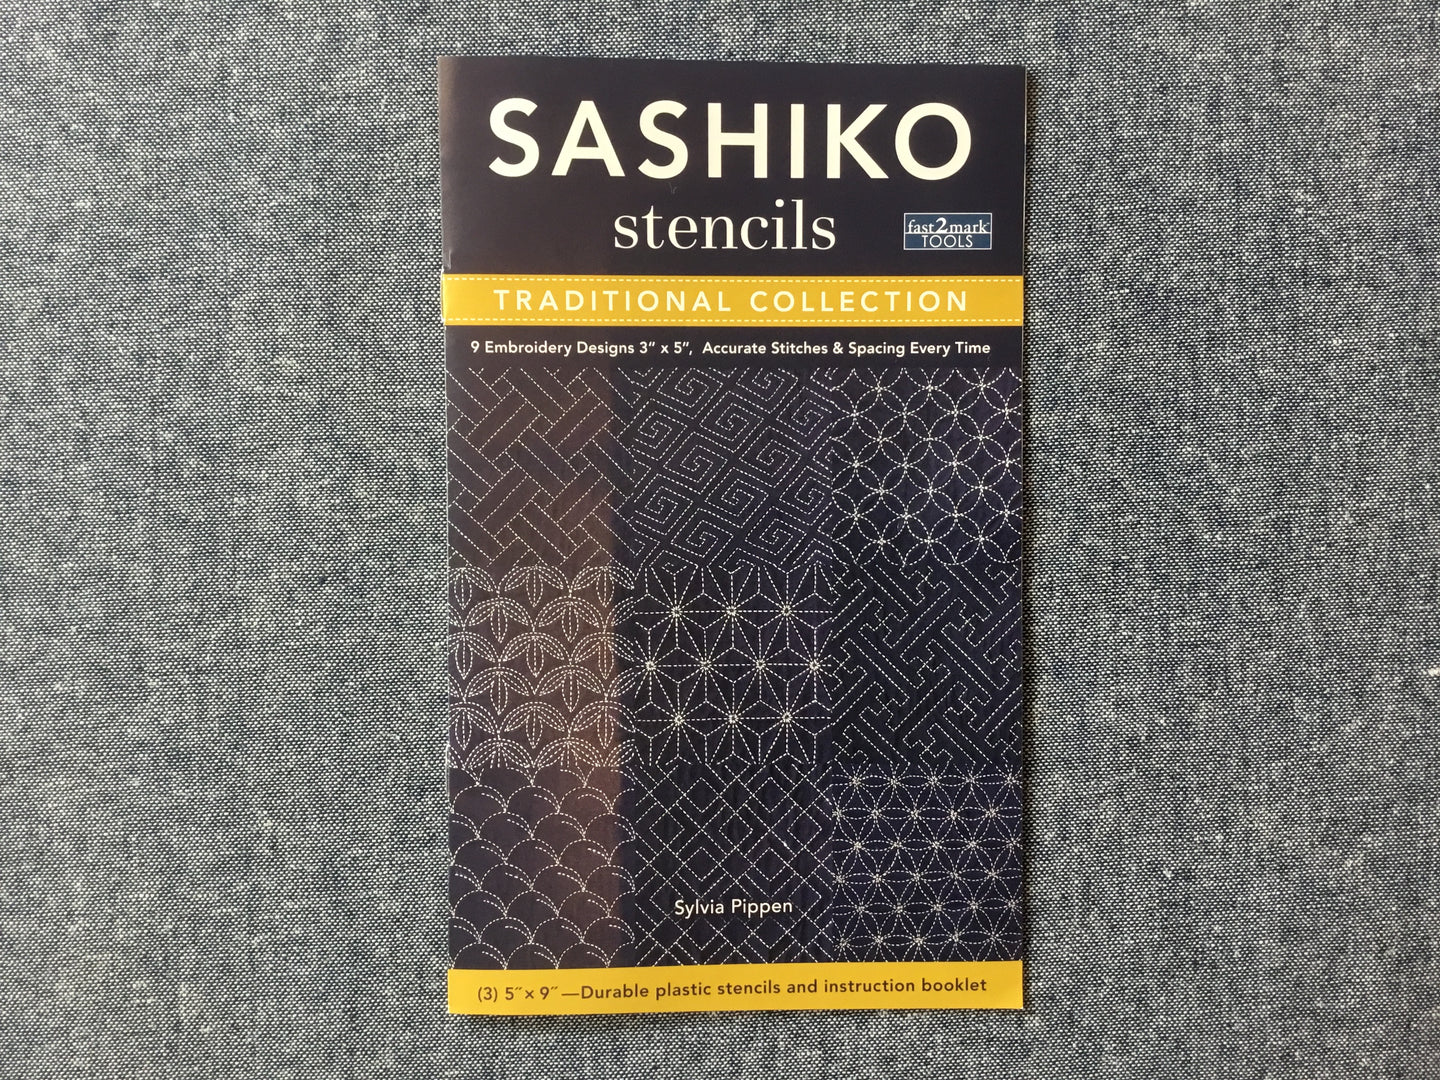 Sashiko Stencils and book